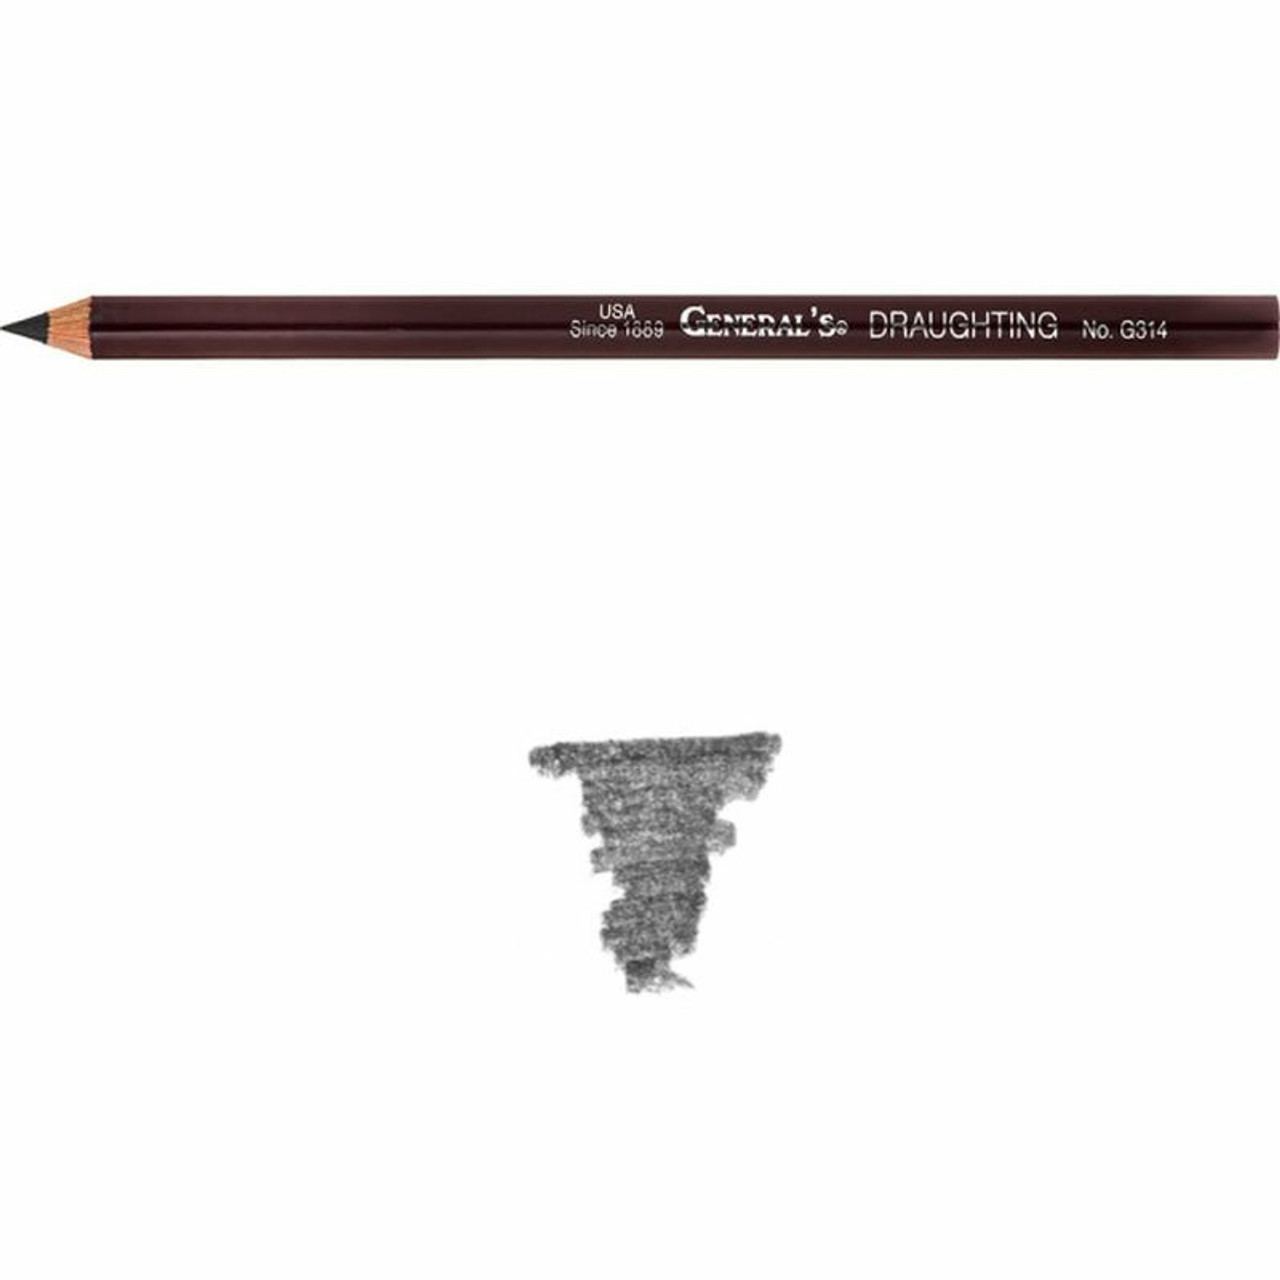 General Pencil Co. Pencil Extender - The Miser